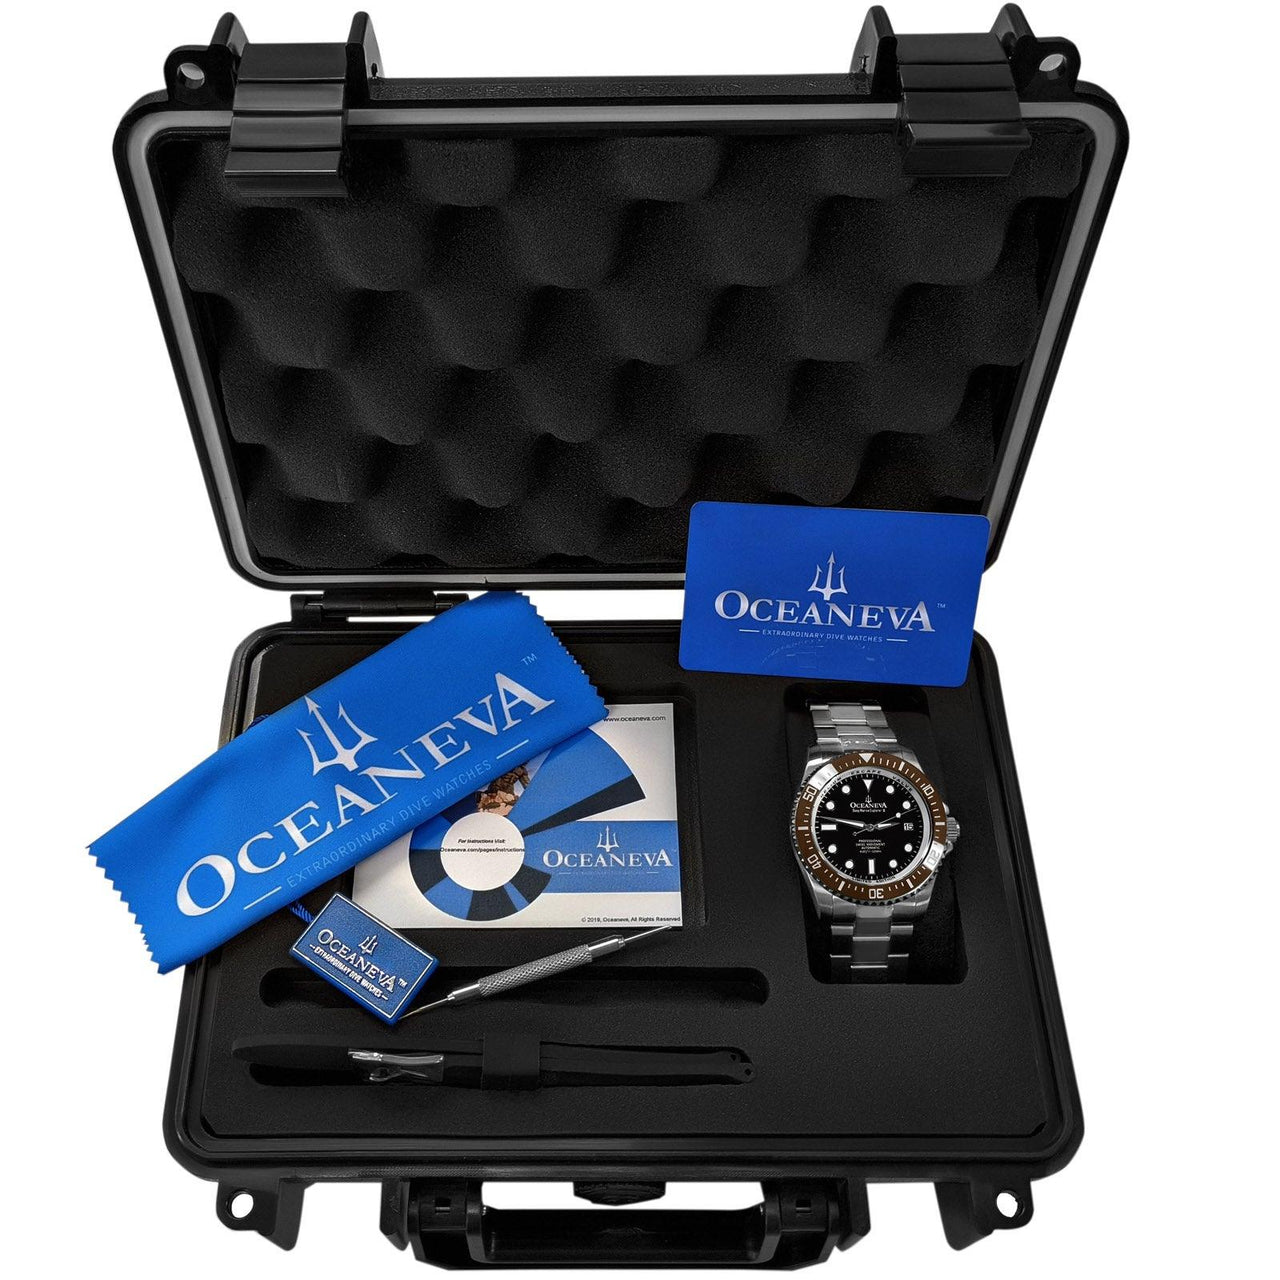 Oceaneva 1250M Dive Watch Brown Bezel Black Dial With Packaging